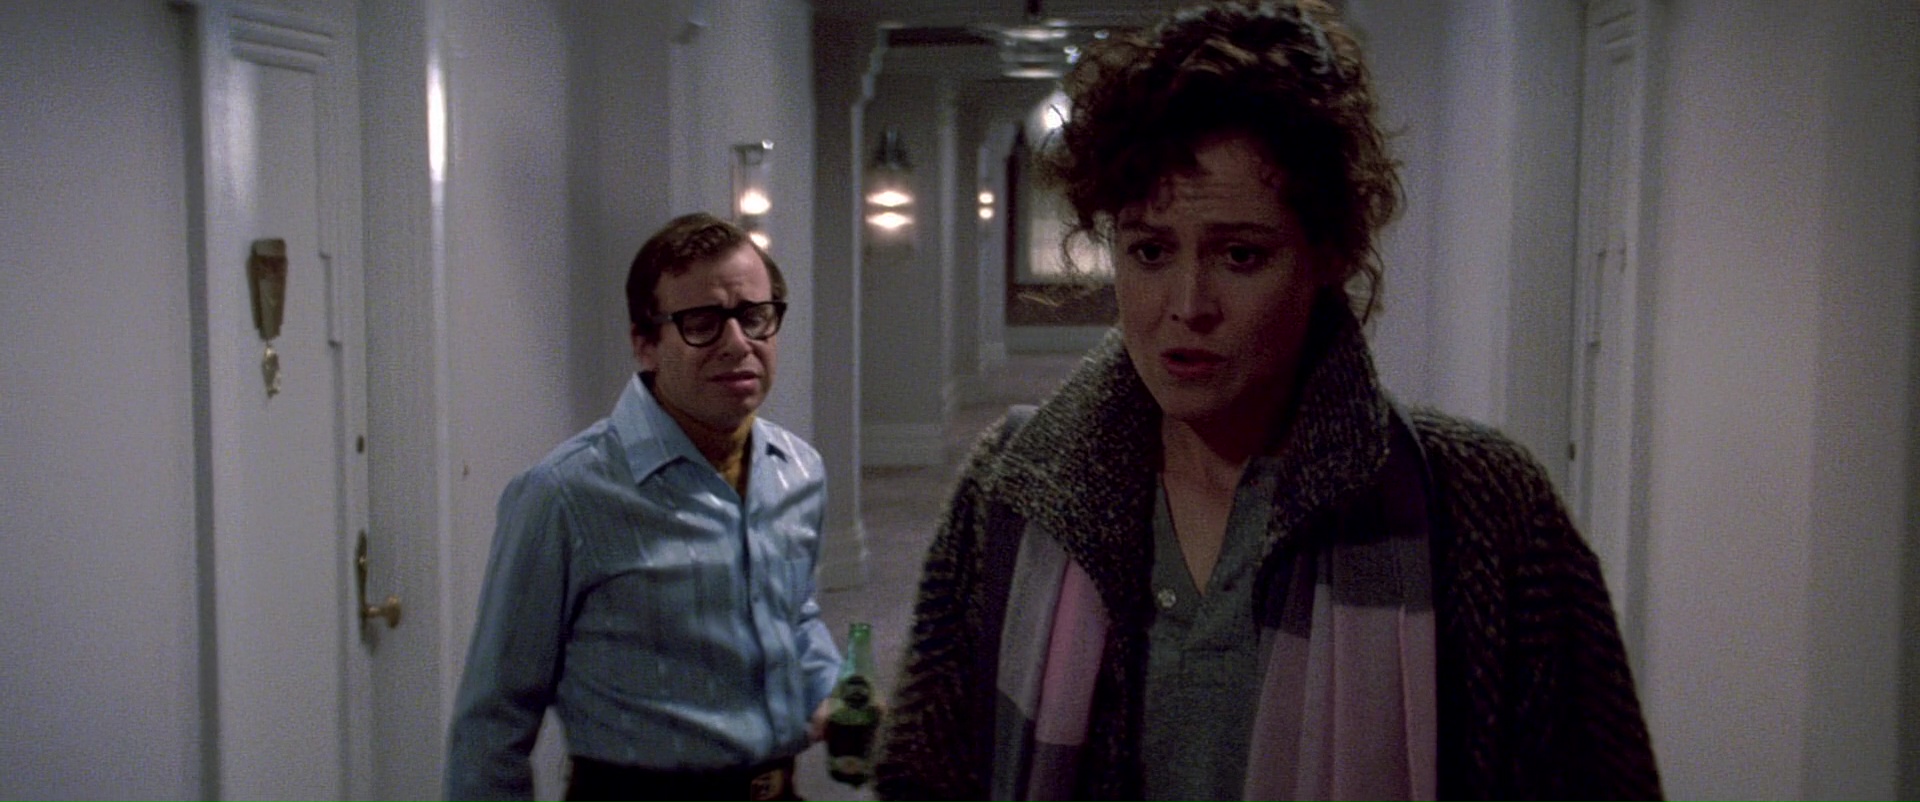 Perrier Water and Rick Moranis in Ghostbusters (1984) Movie1920 x 802